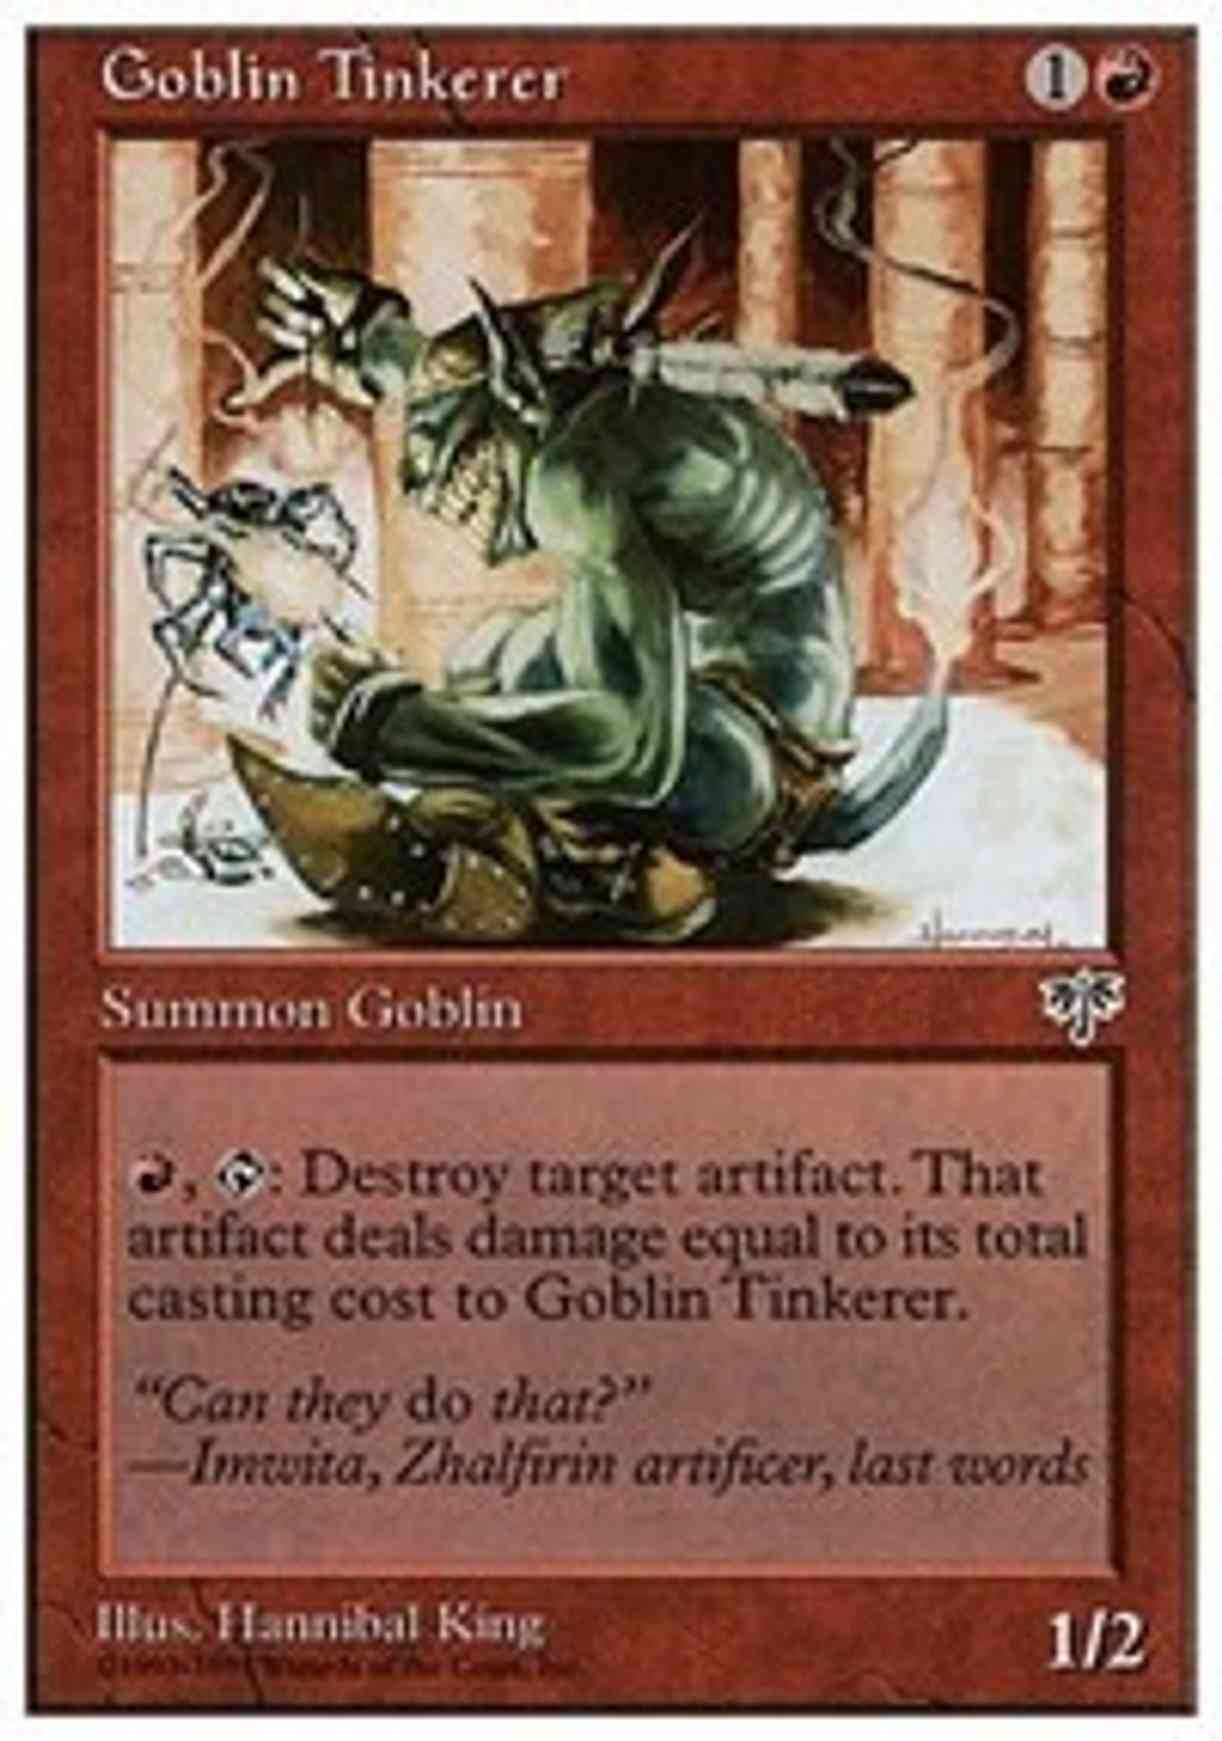 Goblin Tinkerer magic card front